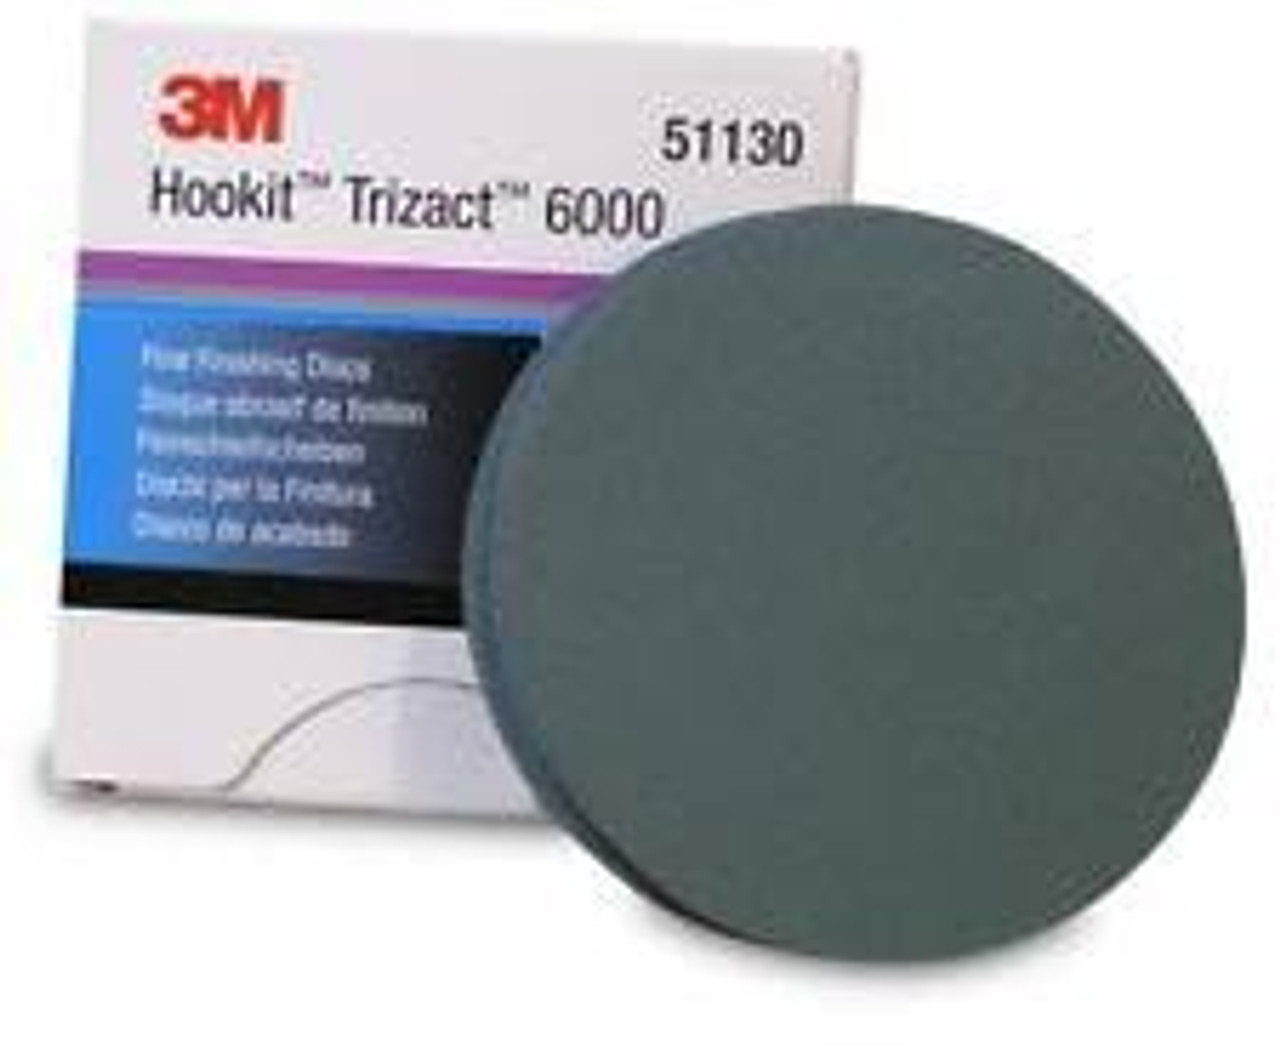 3M™ Trizact™ Hookit™ Foam Abrasive Disc 443SA, 75 mm, 6000, 51131